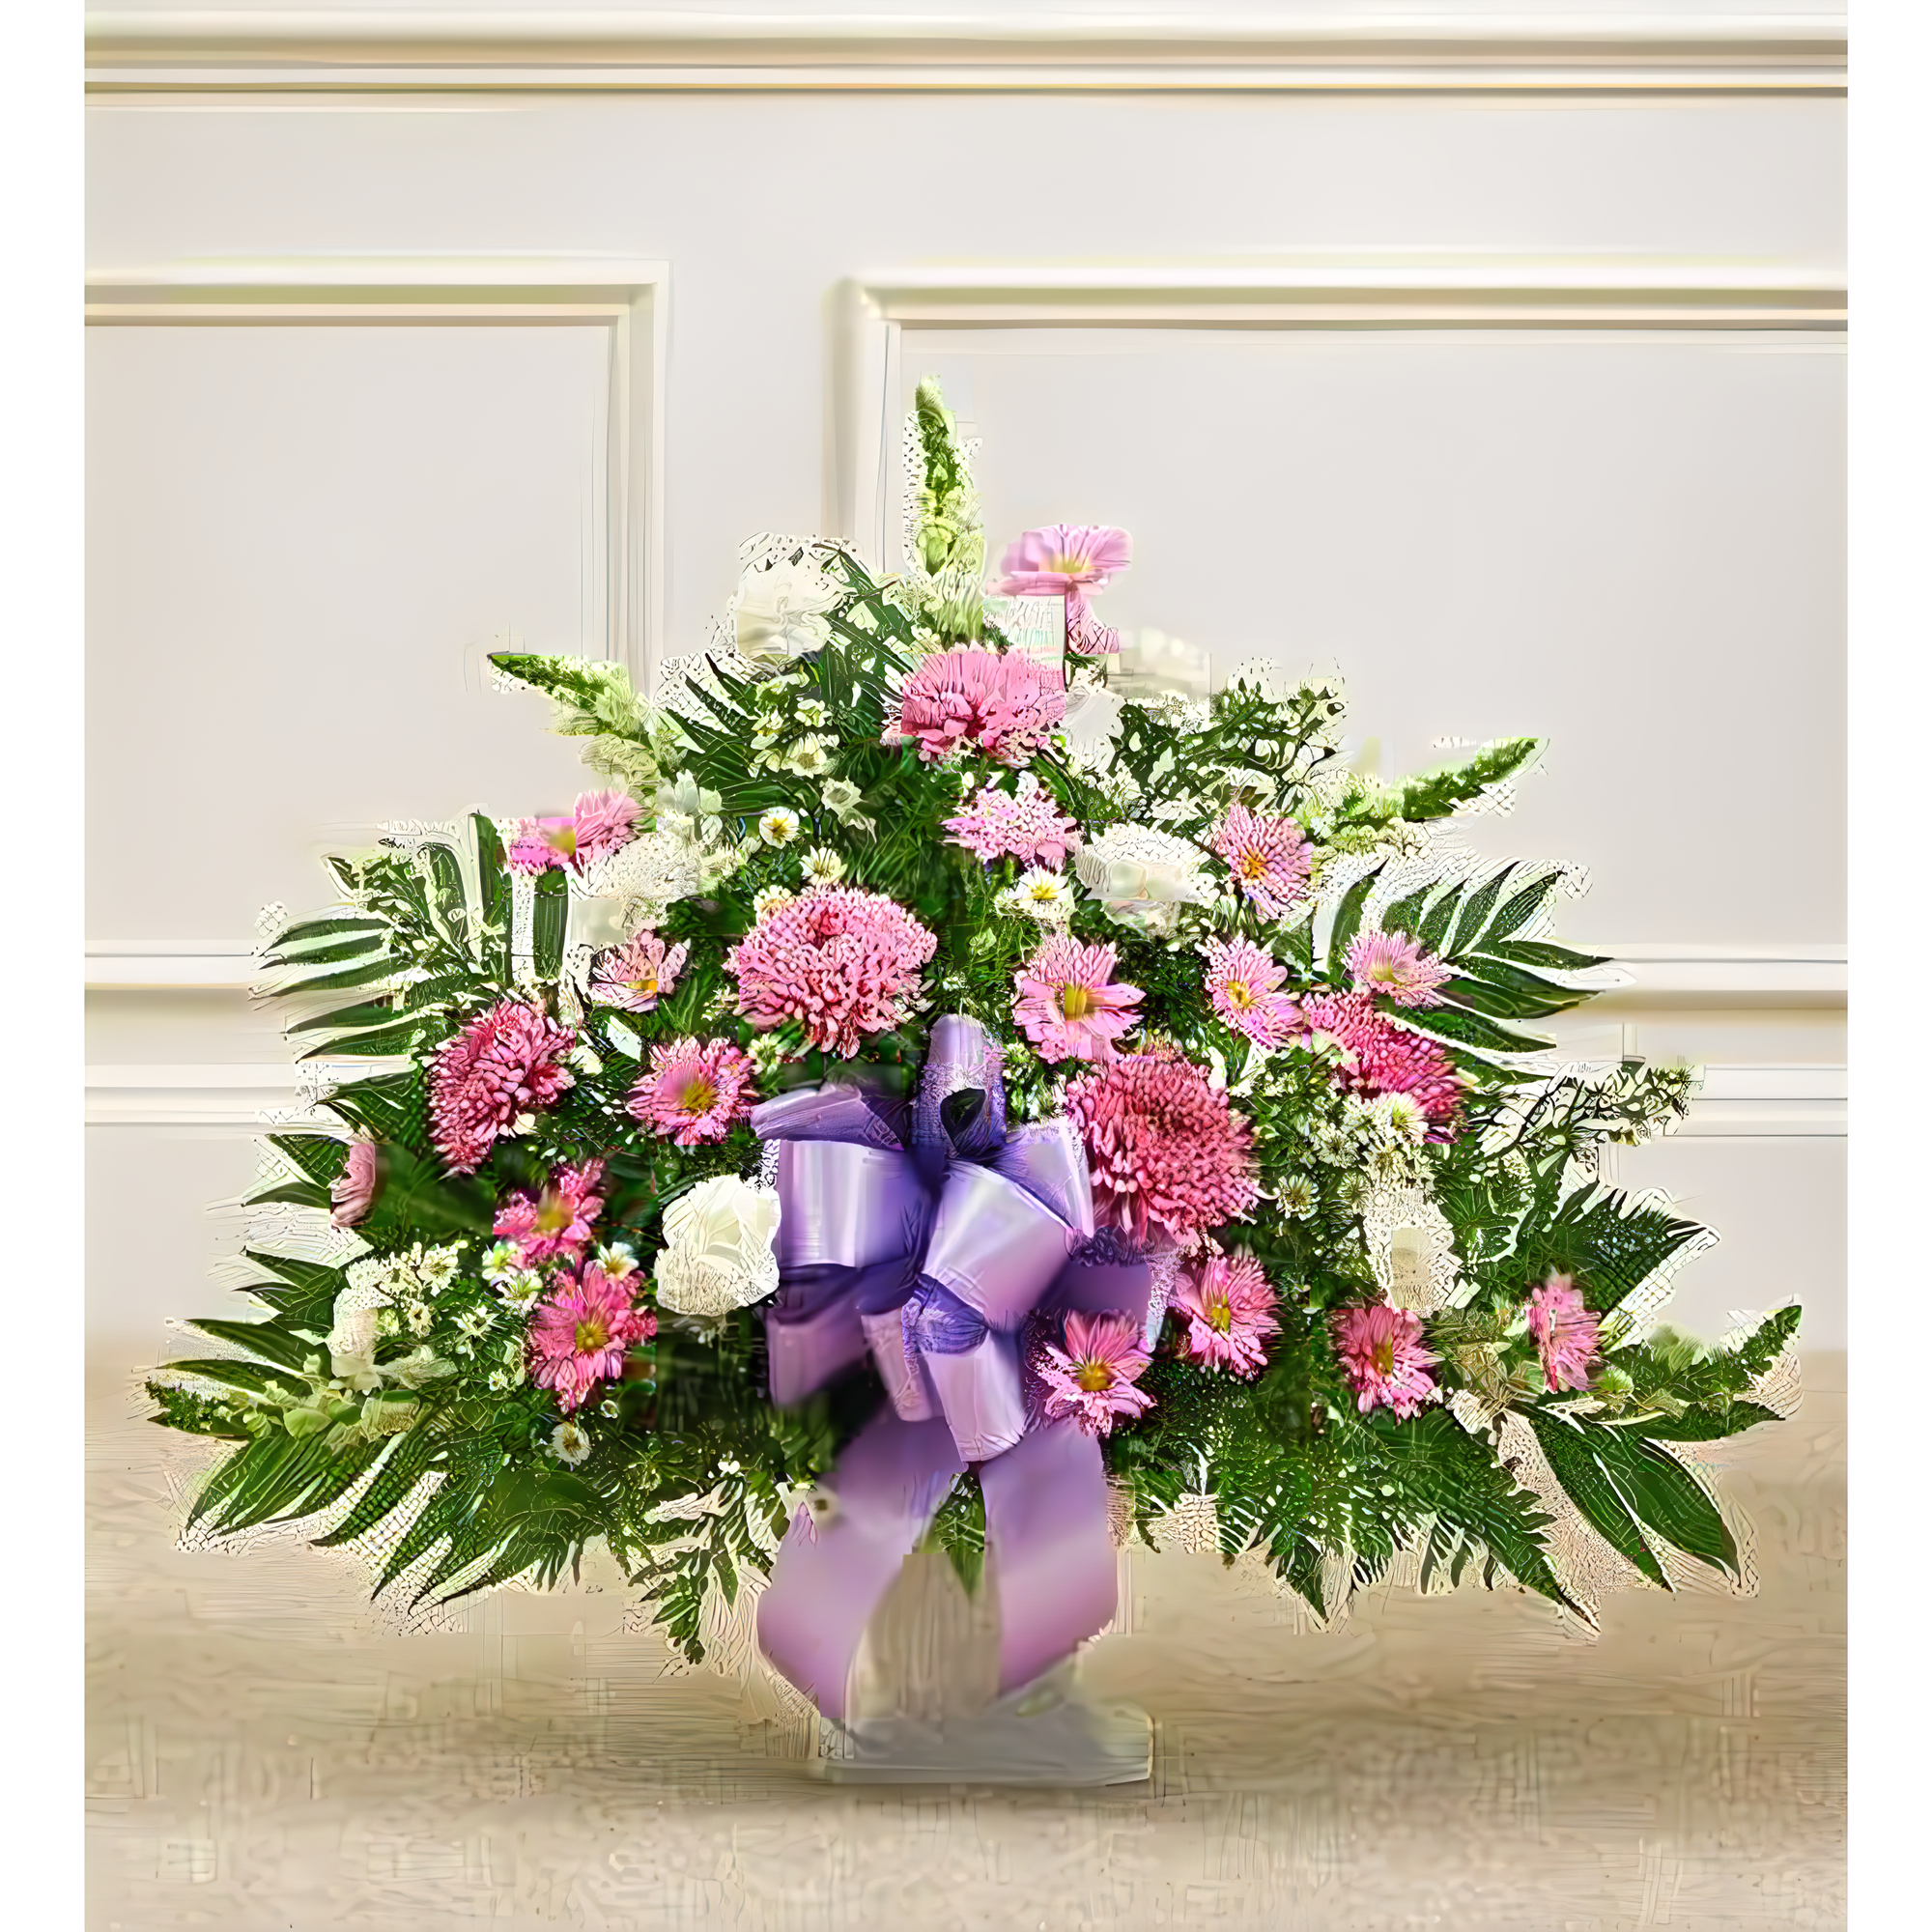 Manhattan Flower Delivery - Tribute Lavender & White Floor Basket Arrangement - Funeral > For the Service